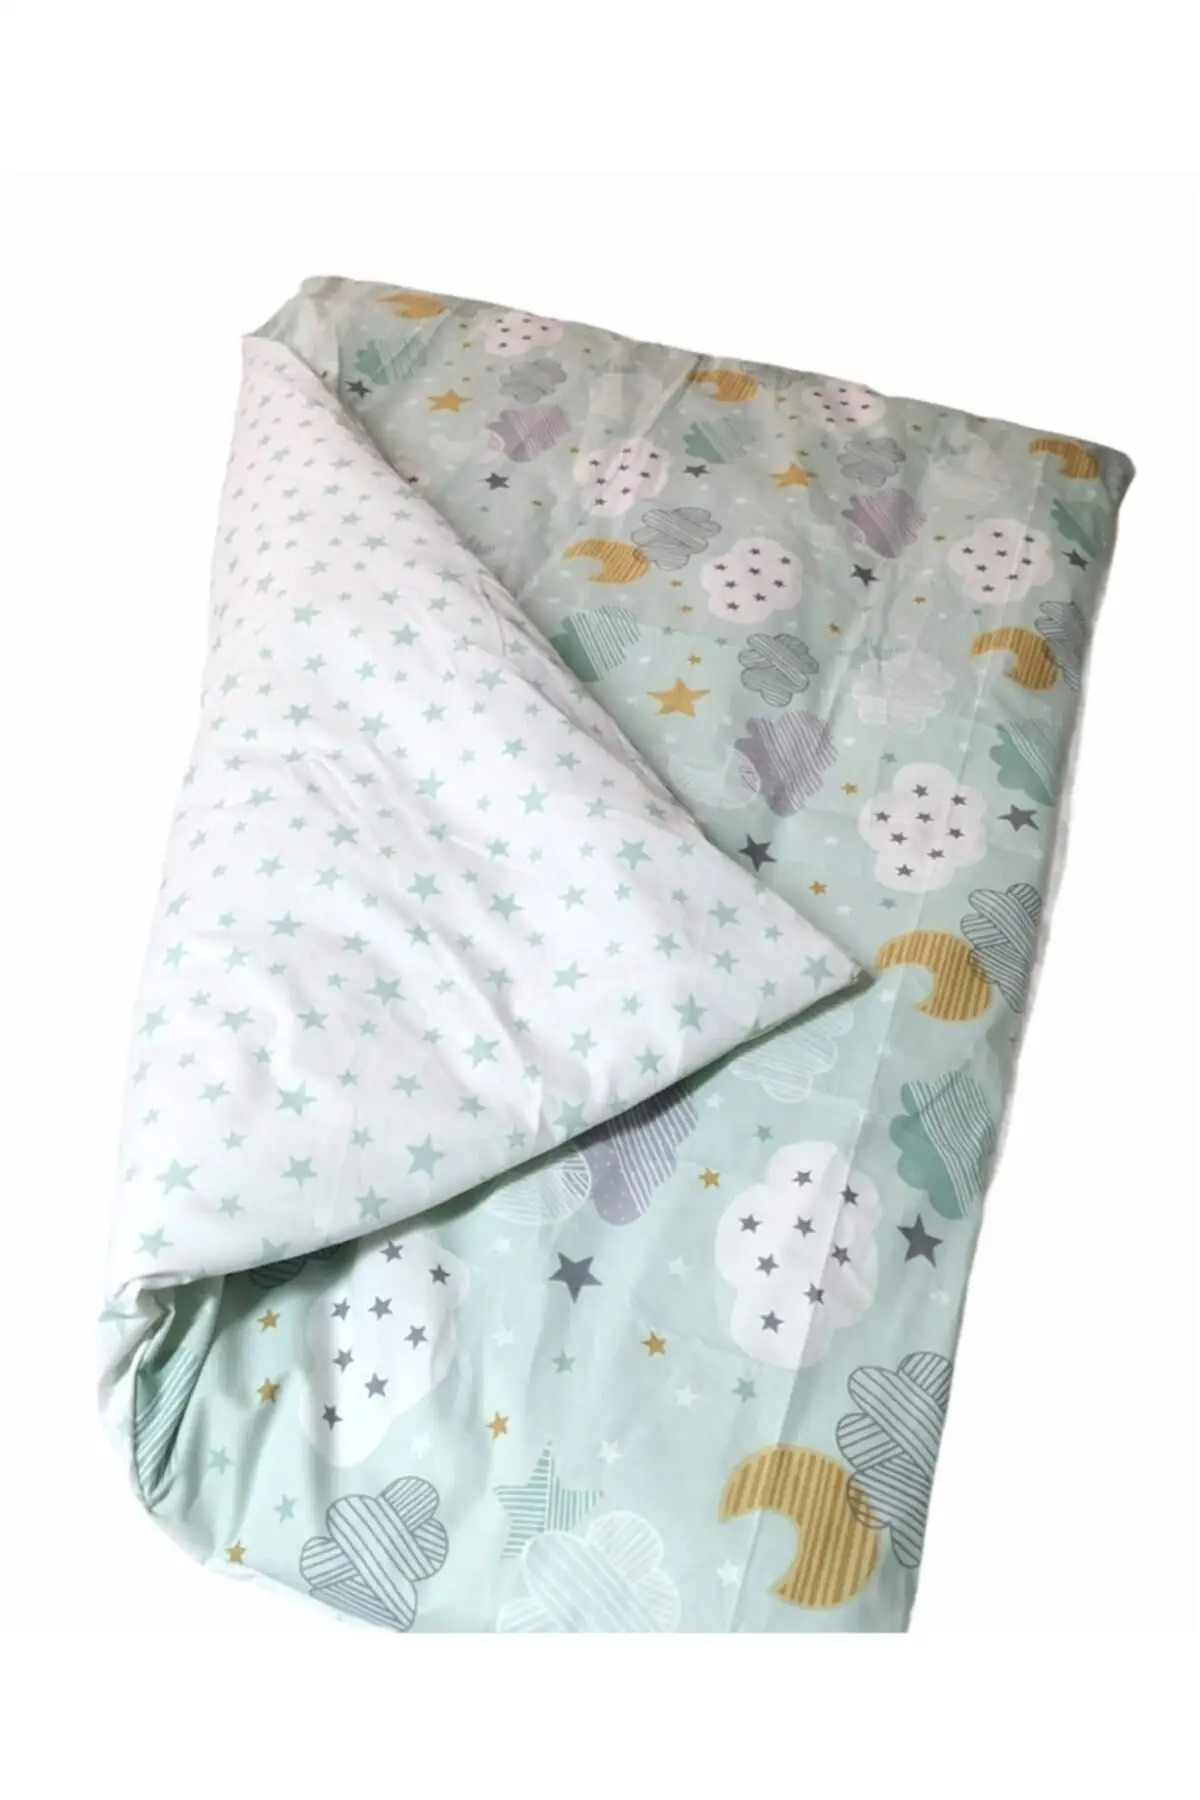 Baby child 100x norgani standard green moon cloud star x fiber cotton baby & children's quilt home textile